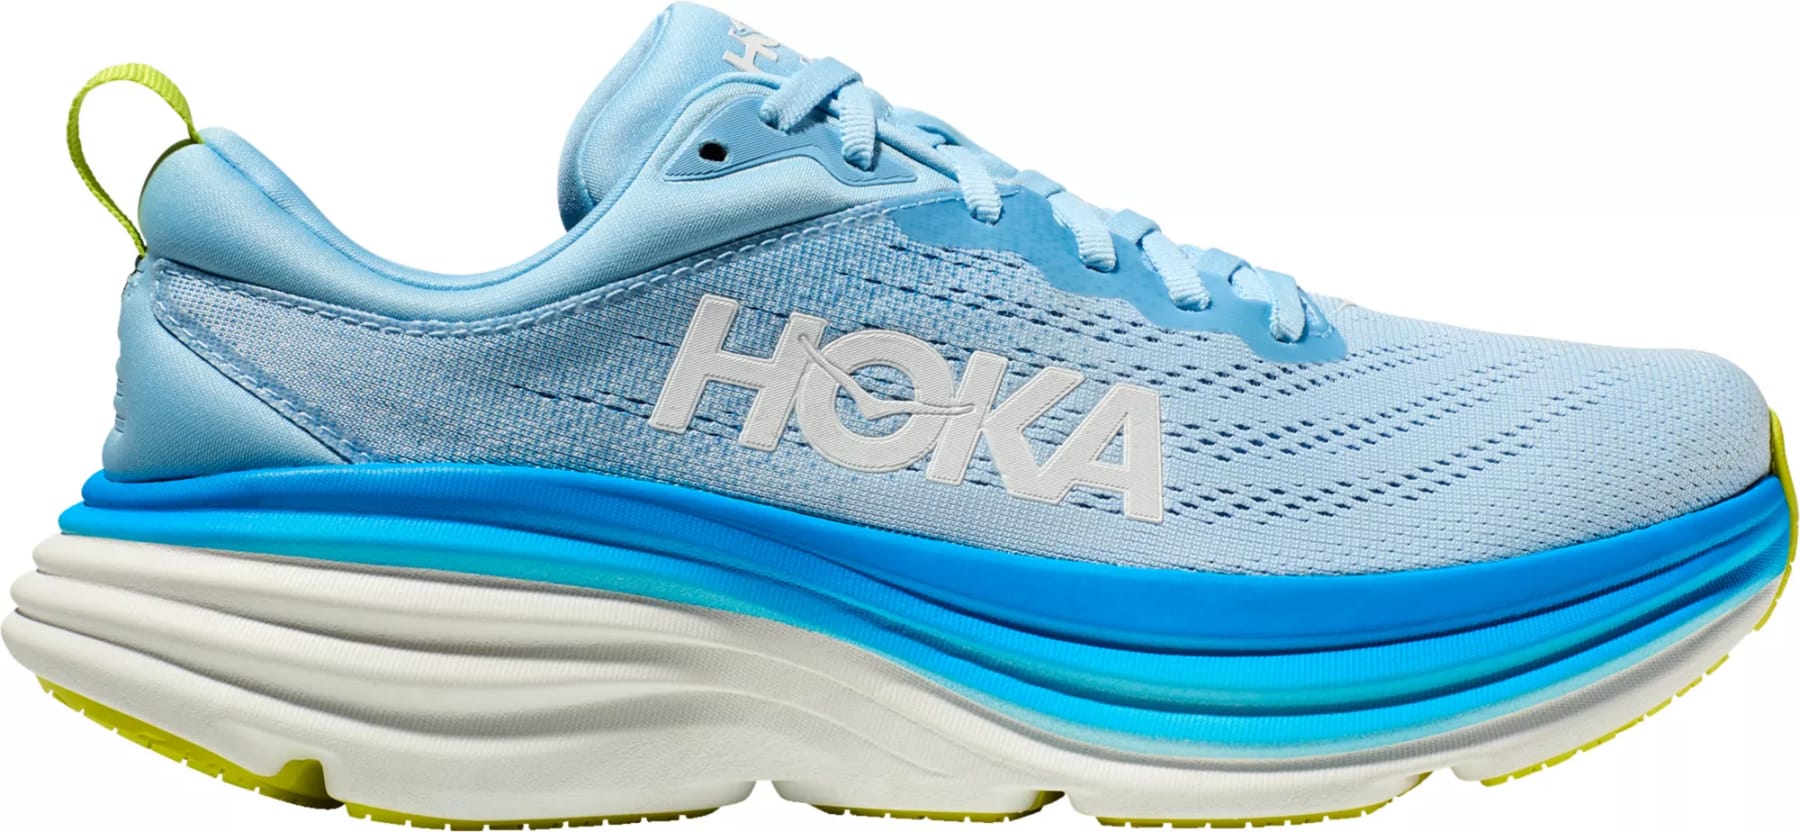 The Hoka Men's Bondi 8 Running Shoes in blue and white.